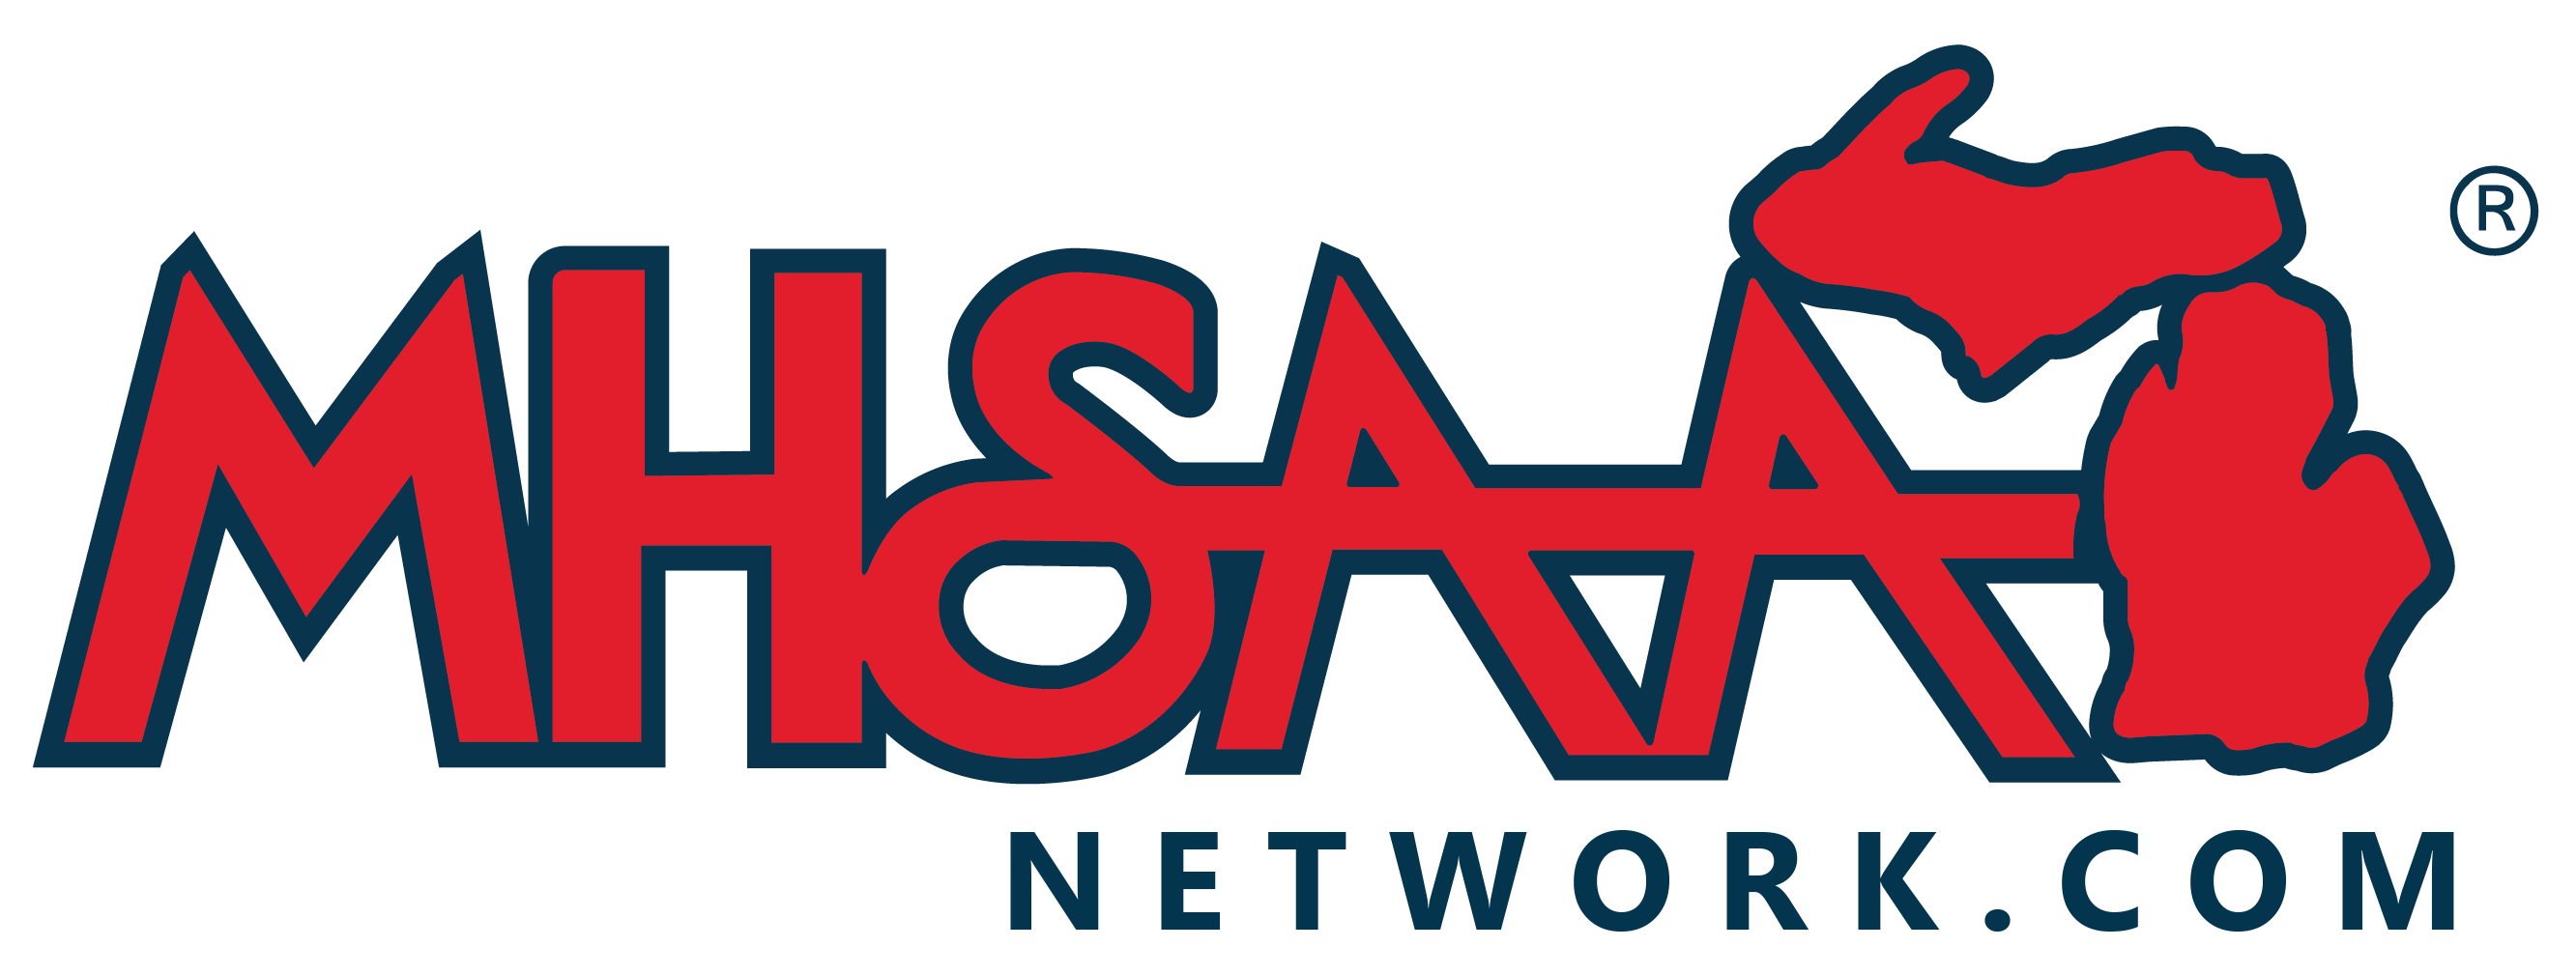 MHSAA Network